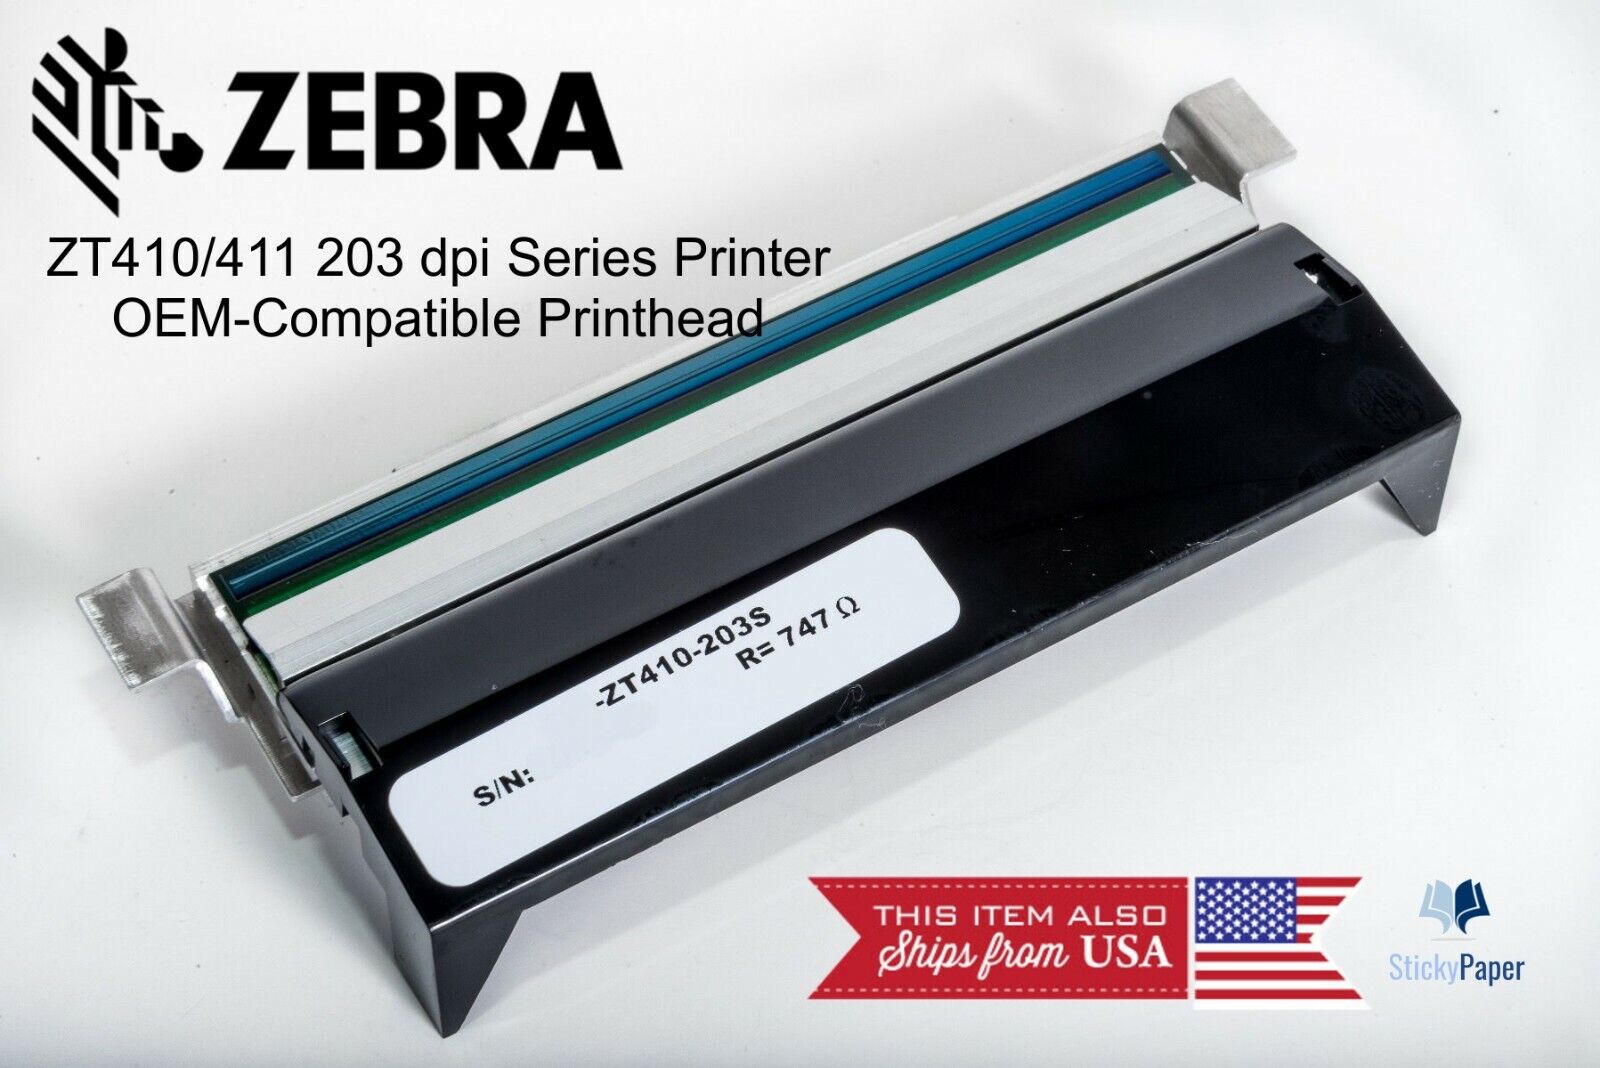 OEM-compatible Zebra printheads for ZT410/ZT411 203 dpi printers (P1058930-009)